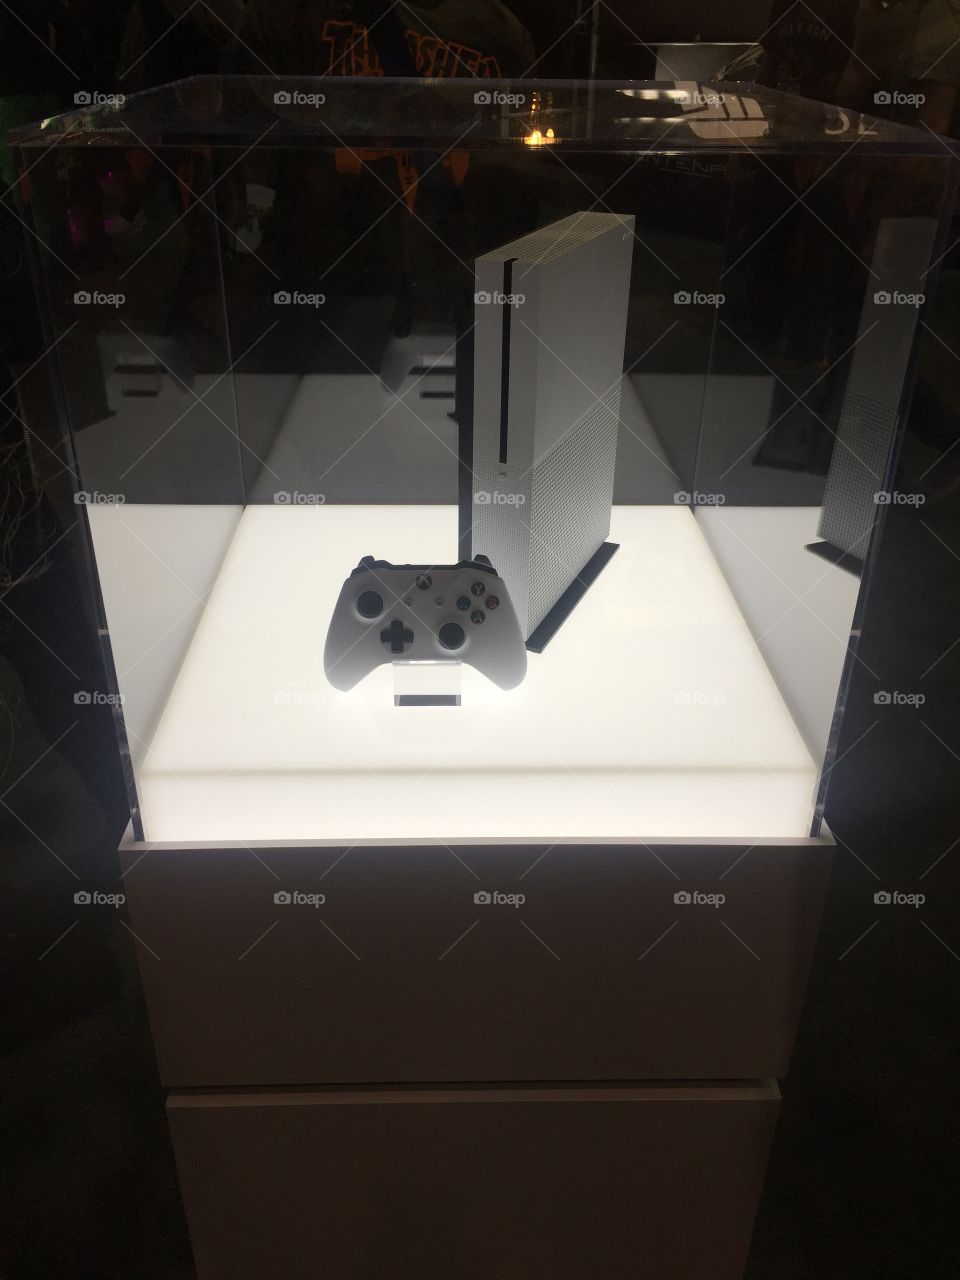 Brand new Xbox One S
